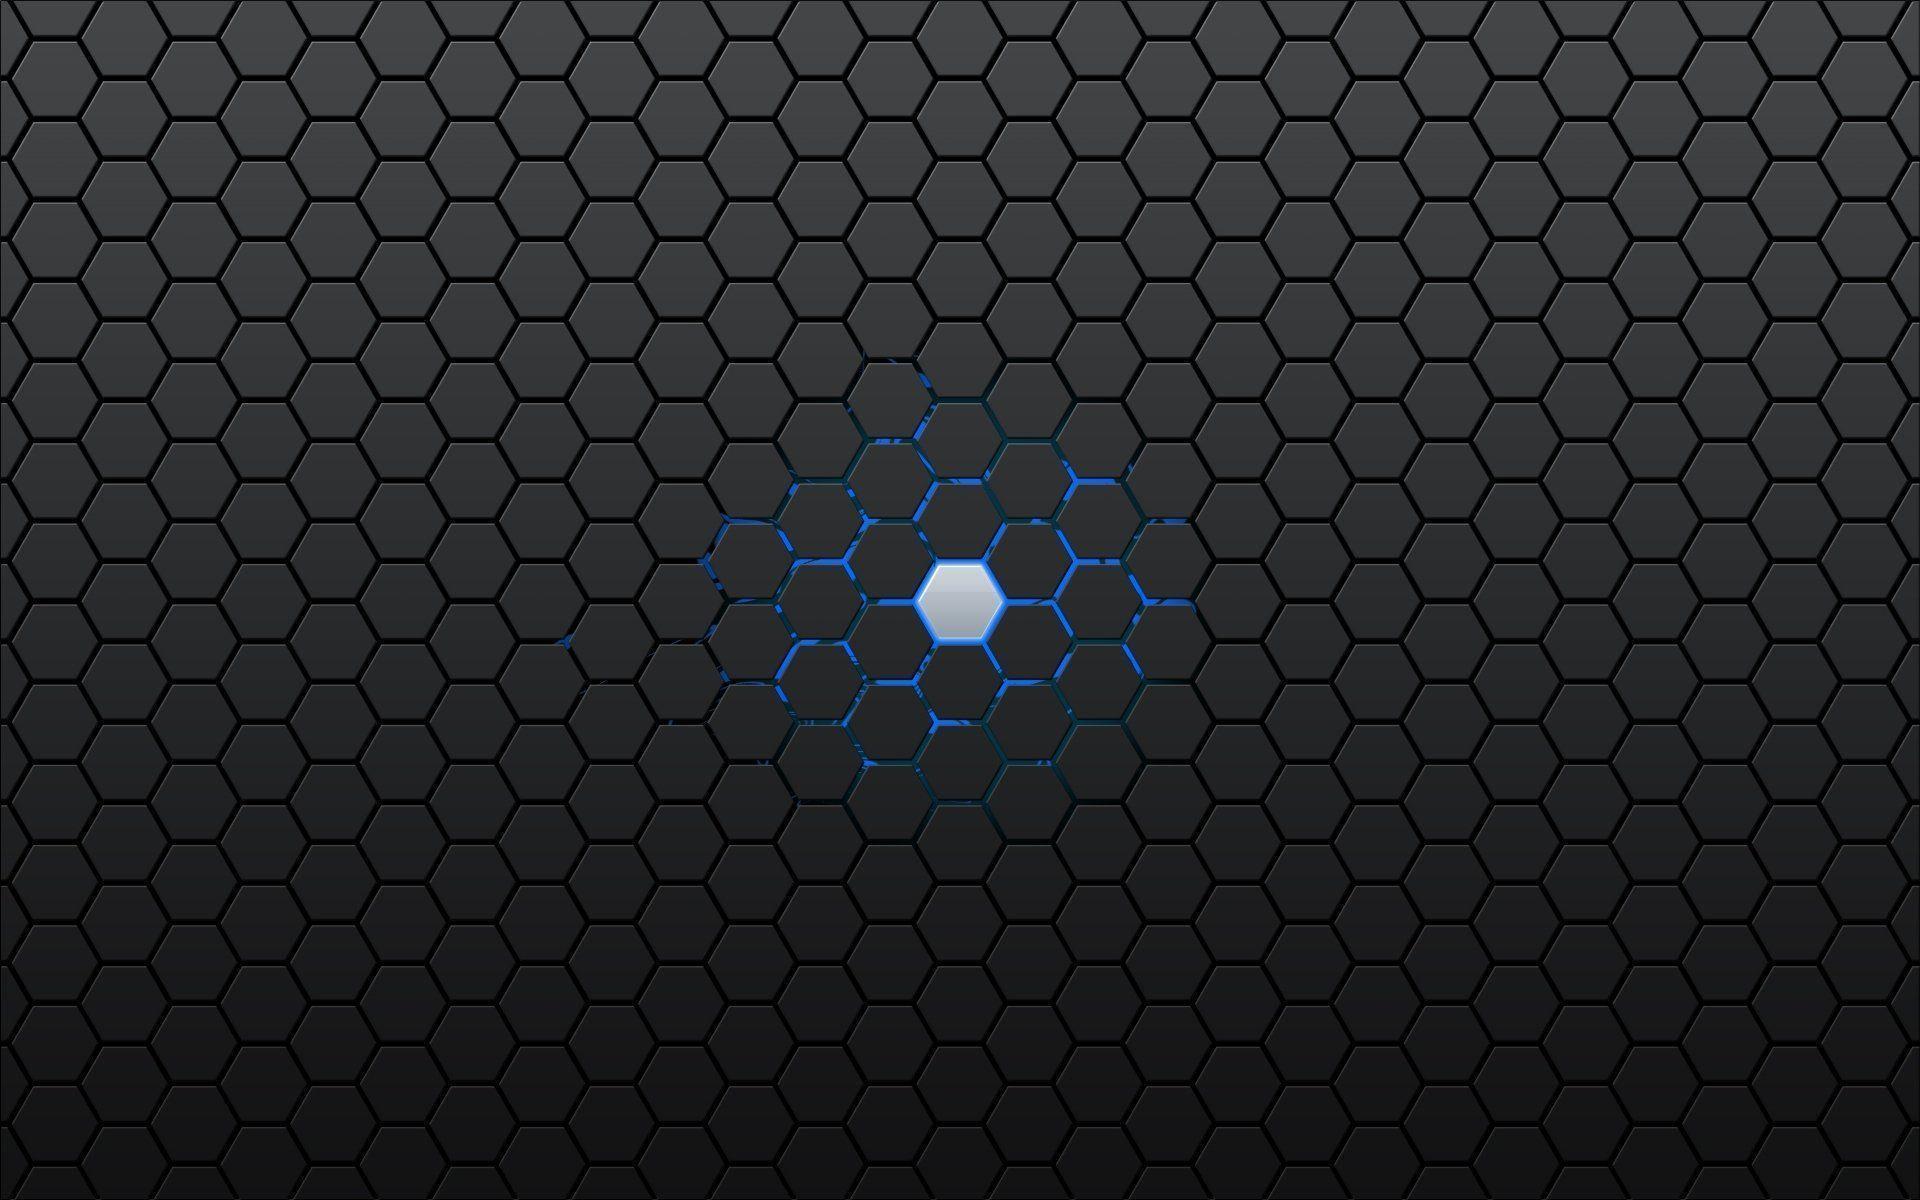 iPhone wallpaper 4K  Hexagon Pattern Collection